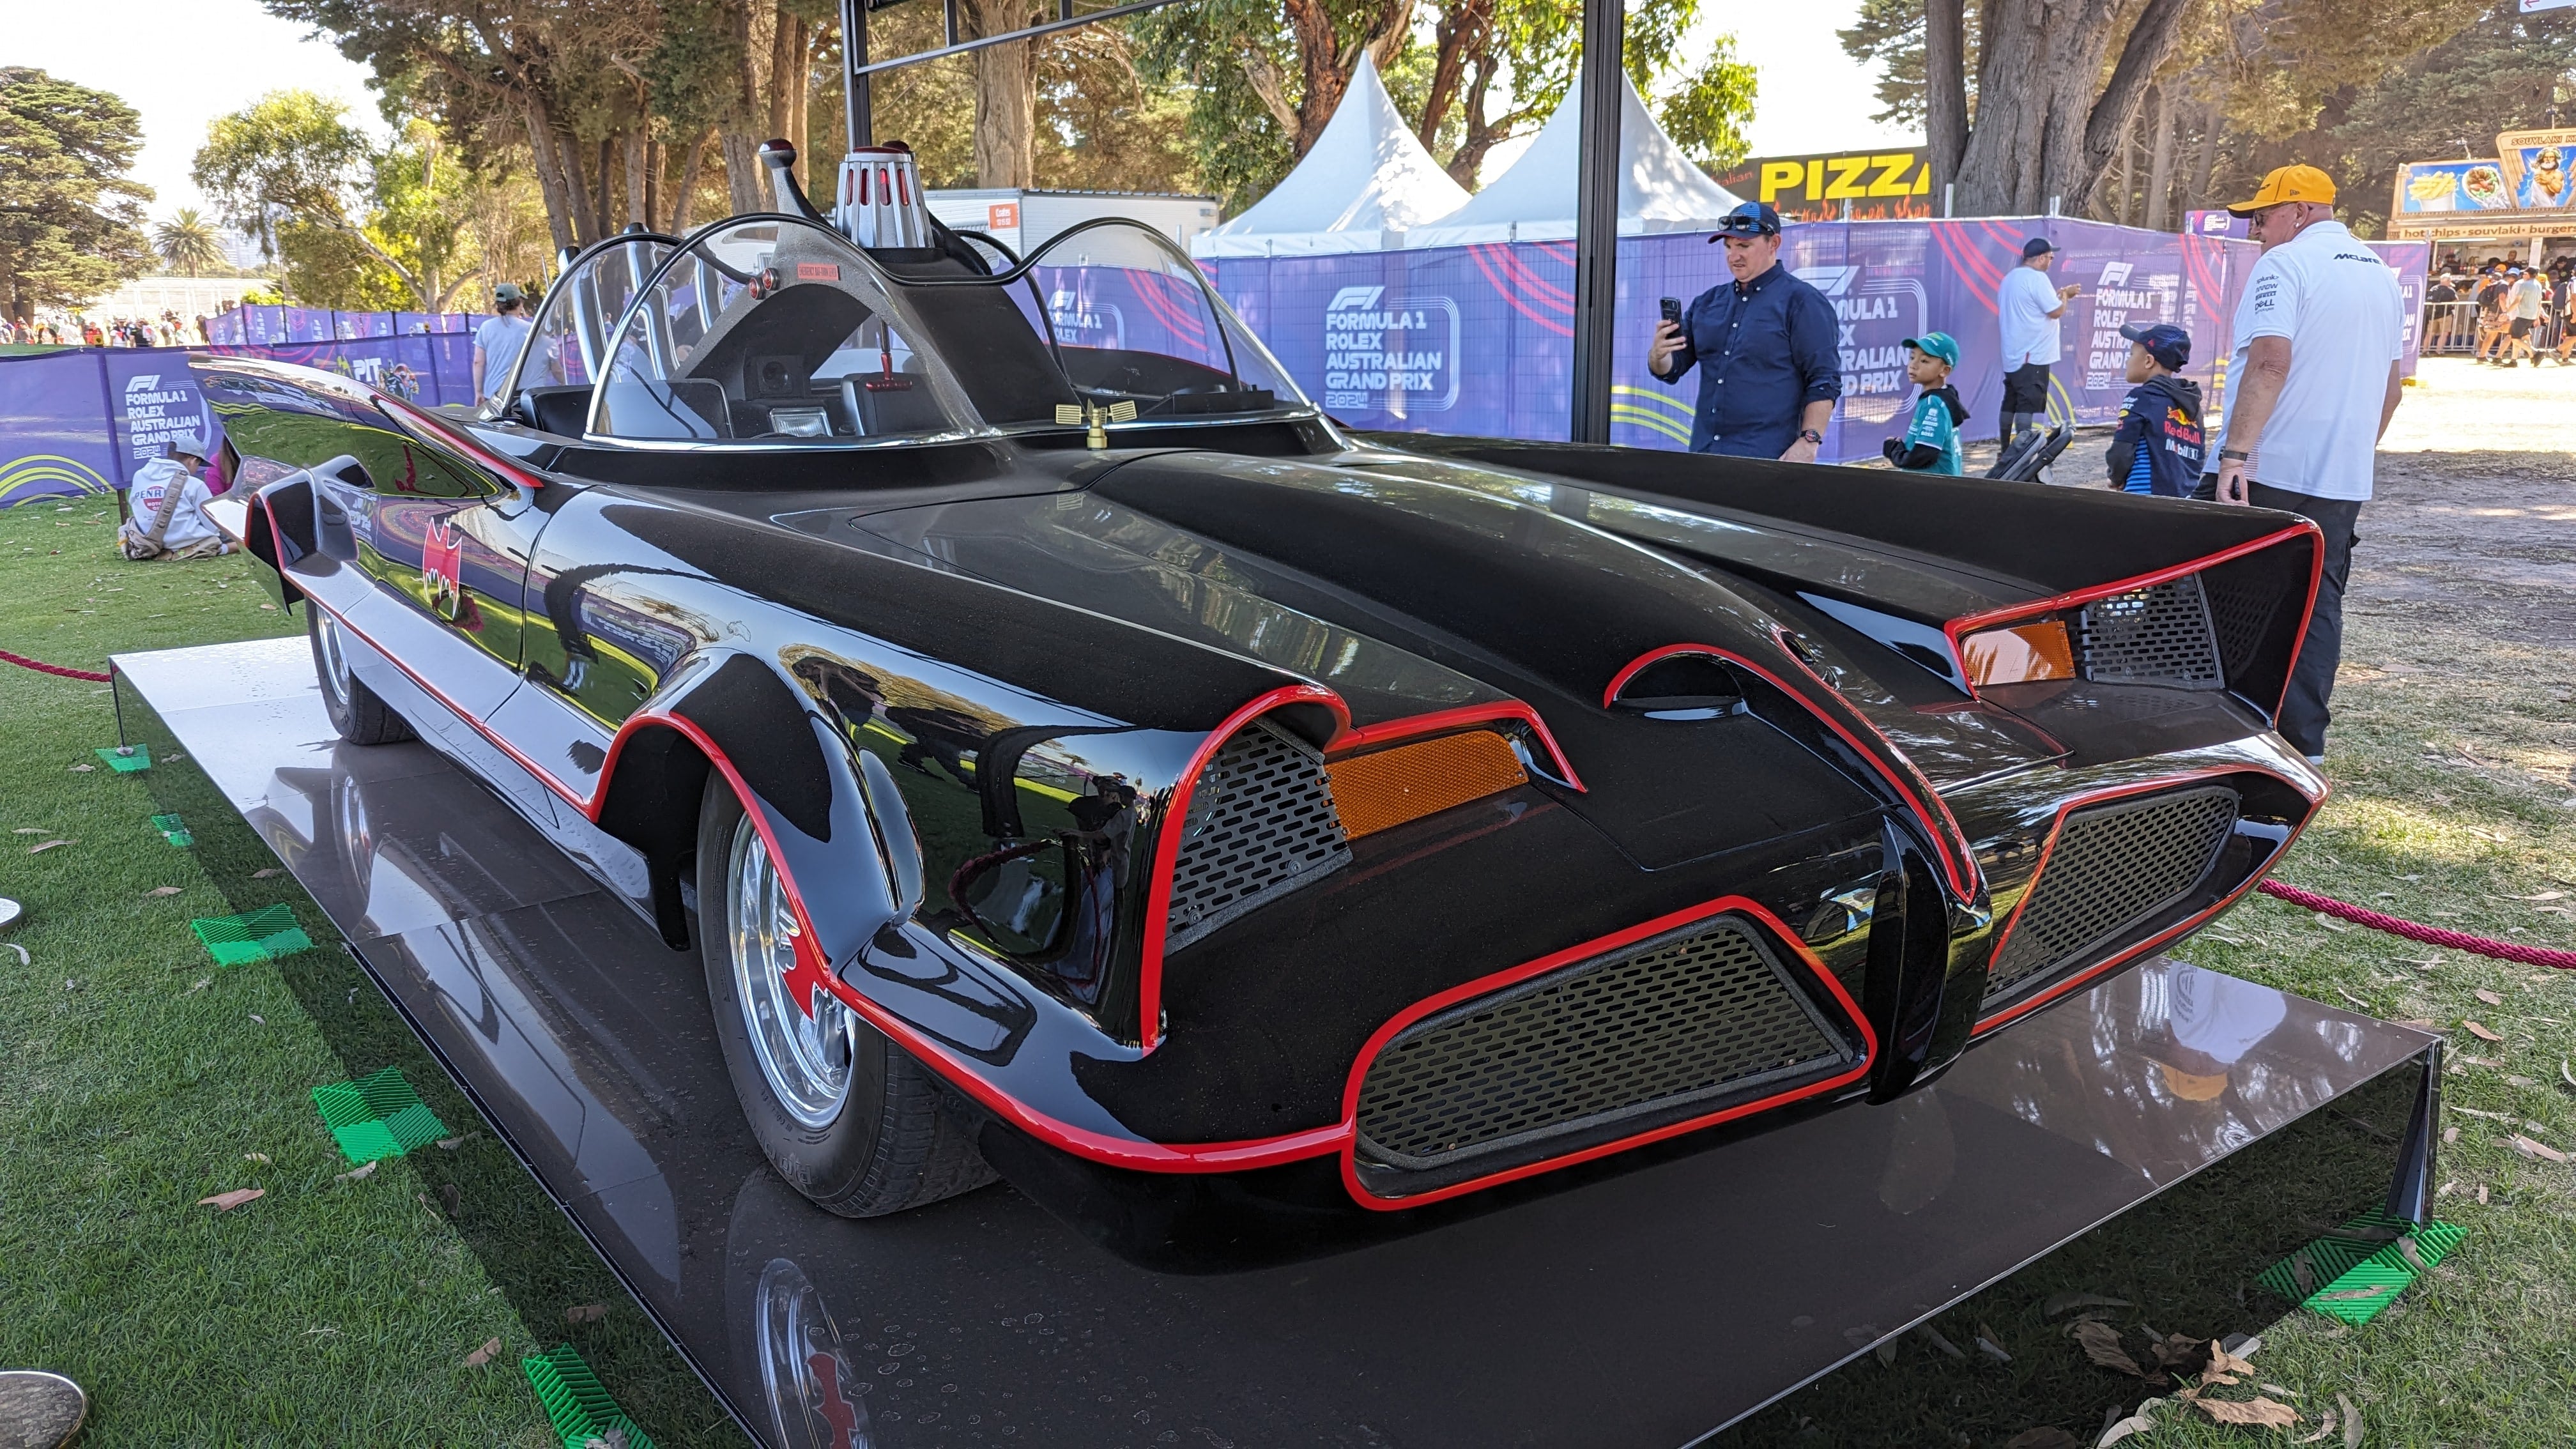 Holy smokes it's the Batmobile!